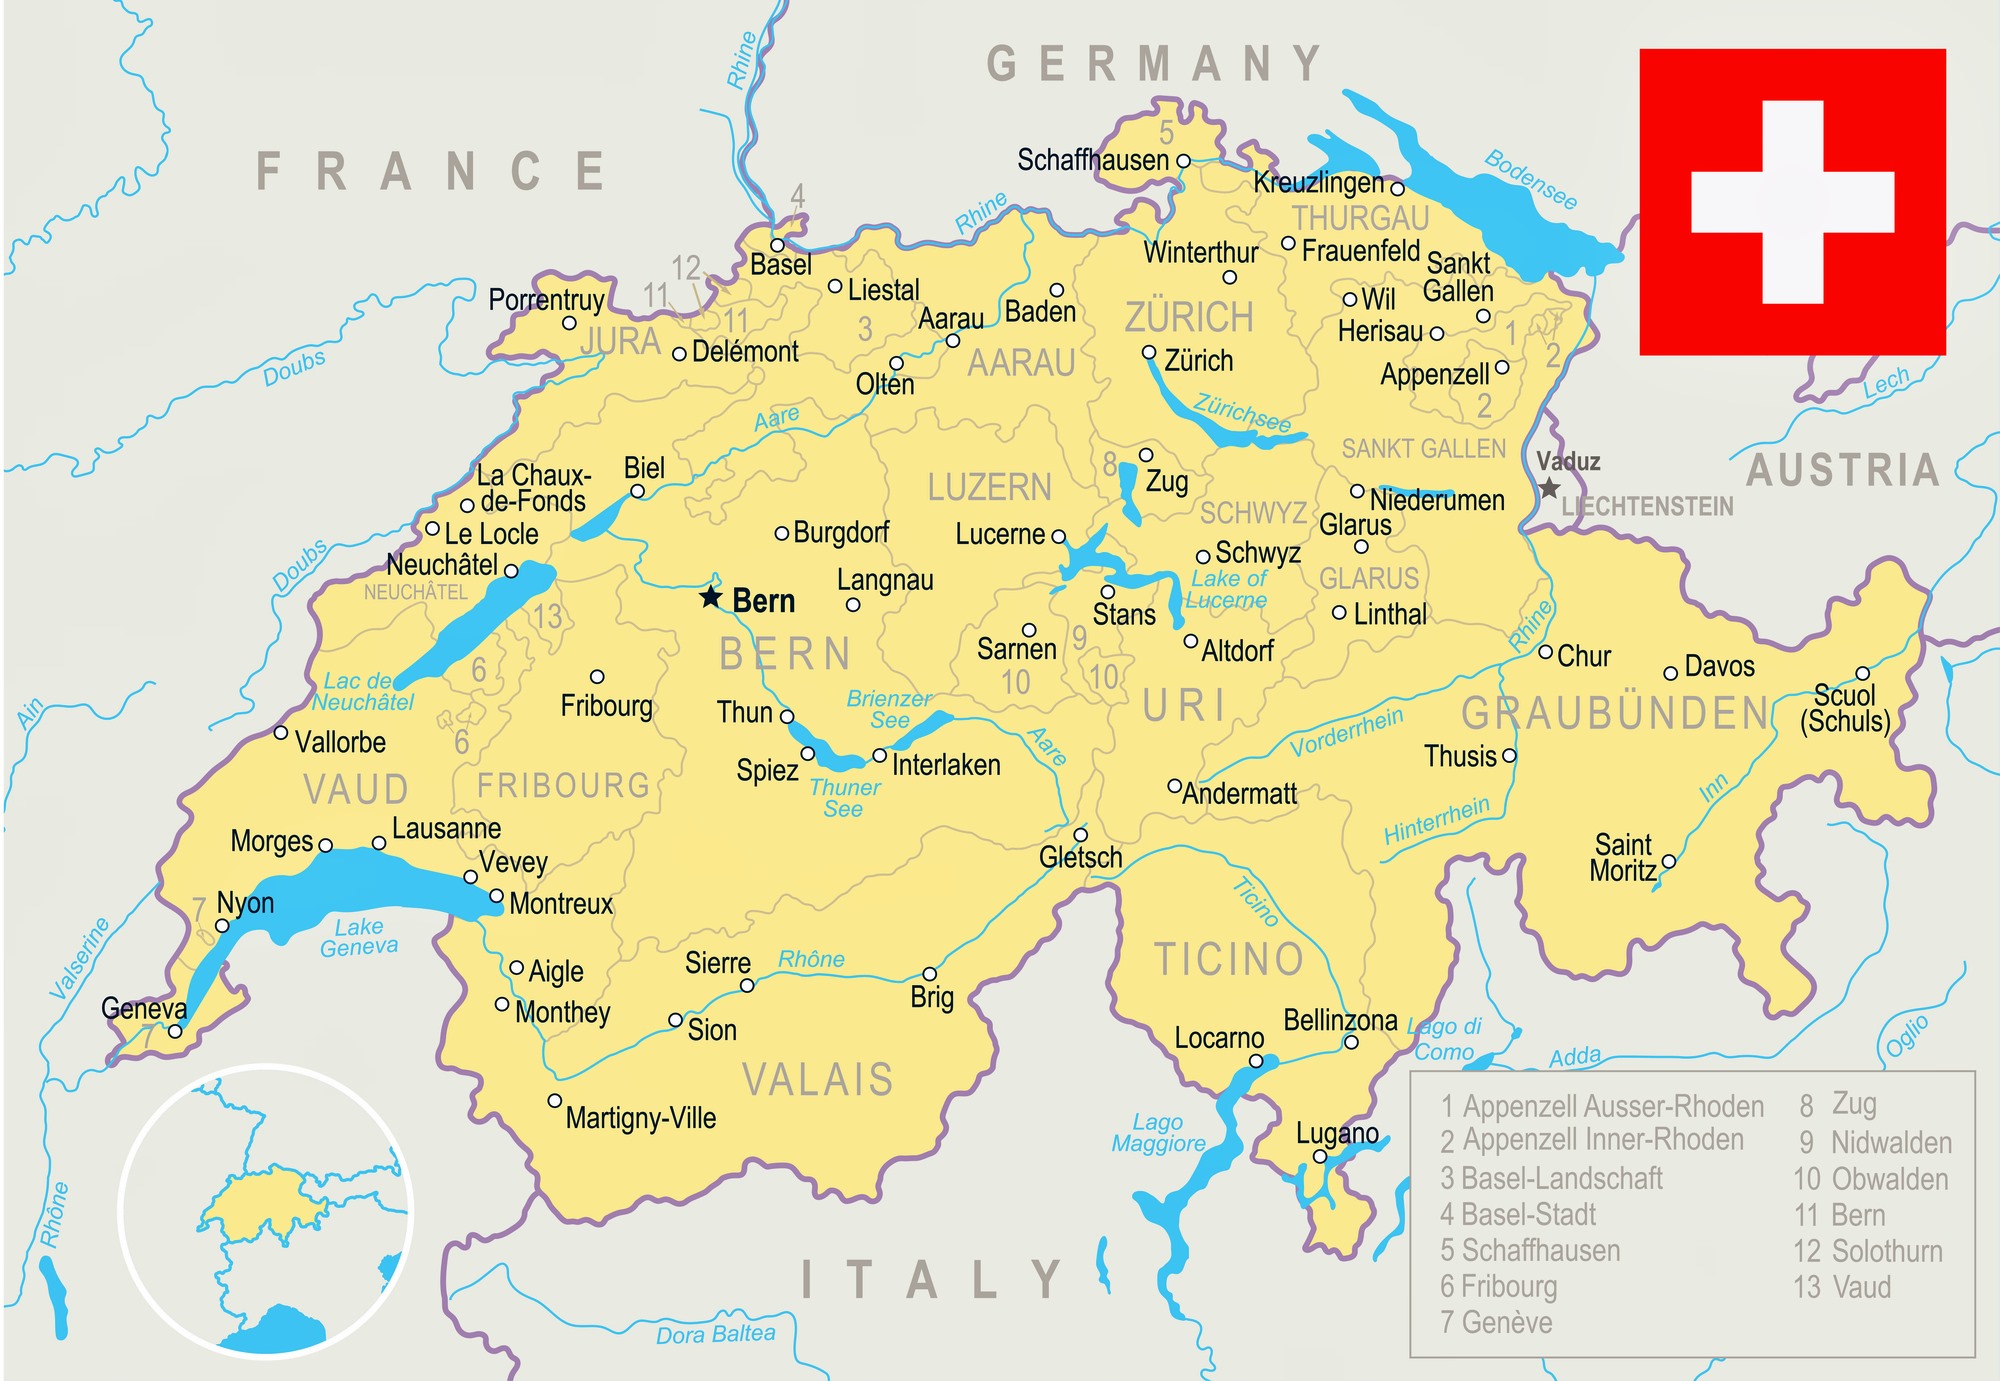 швейцария на карте мира